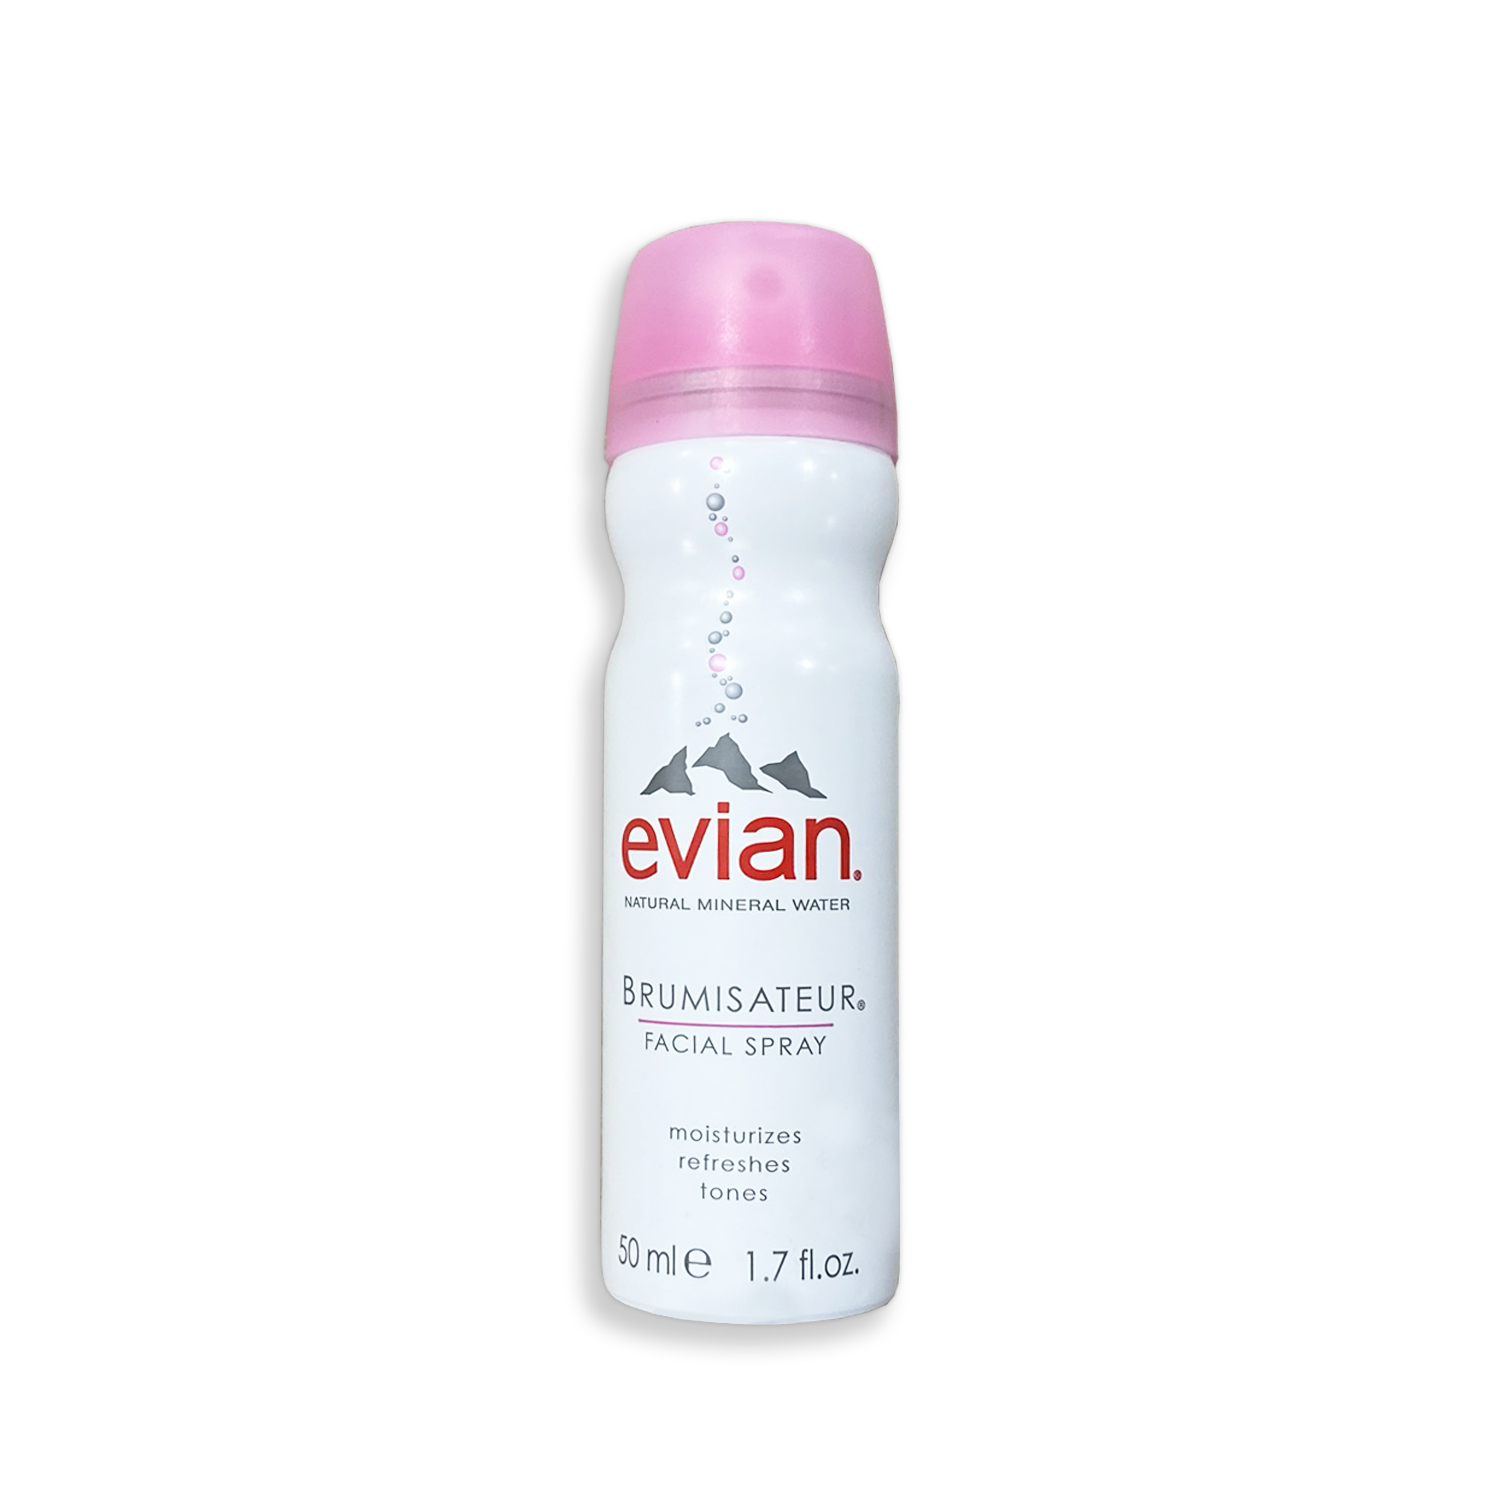 Evian Brumisateur Soothing Facial Spray